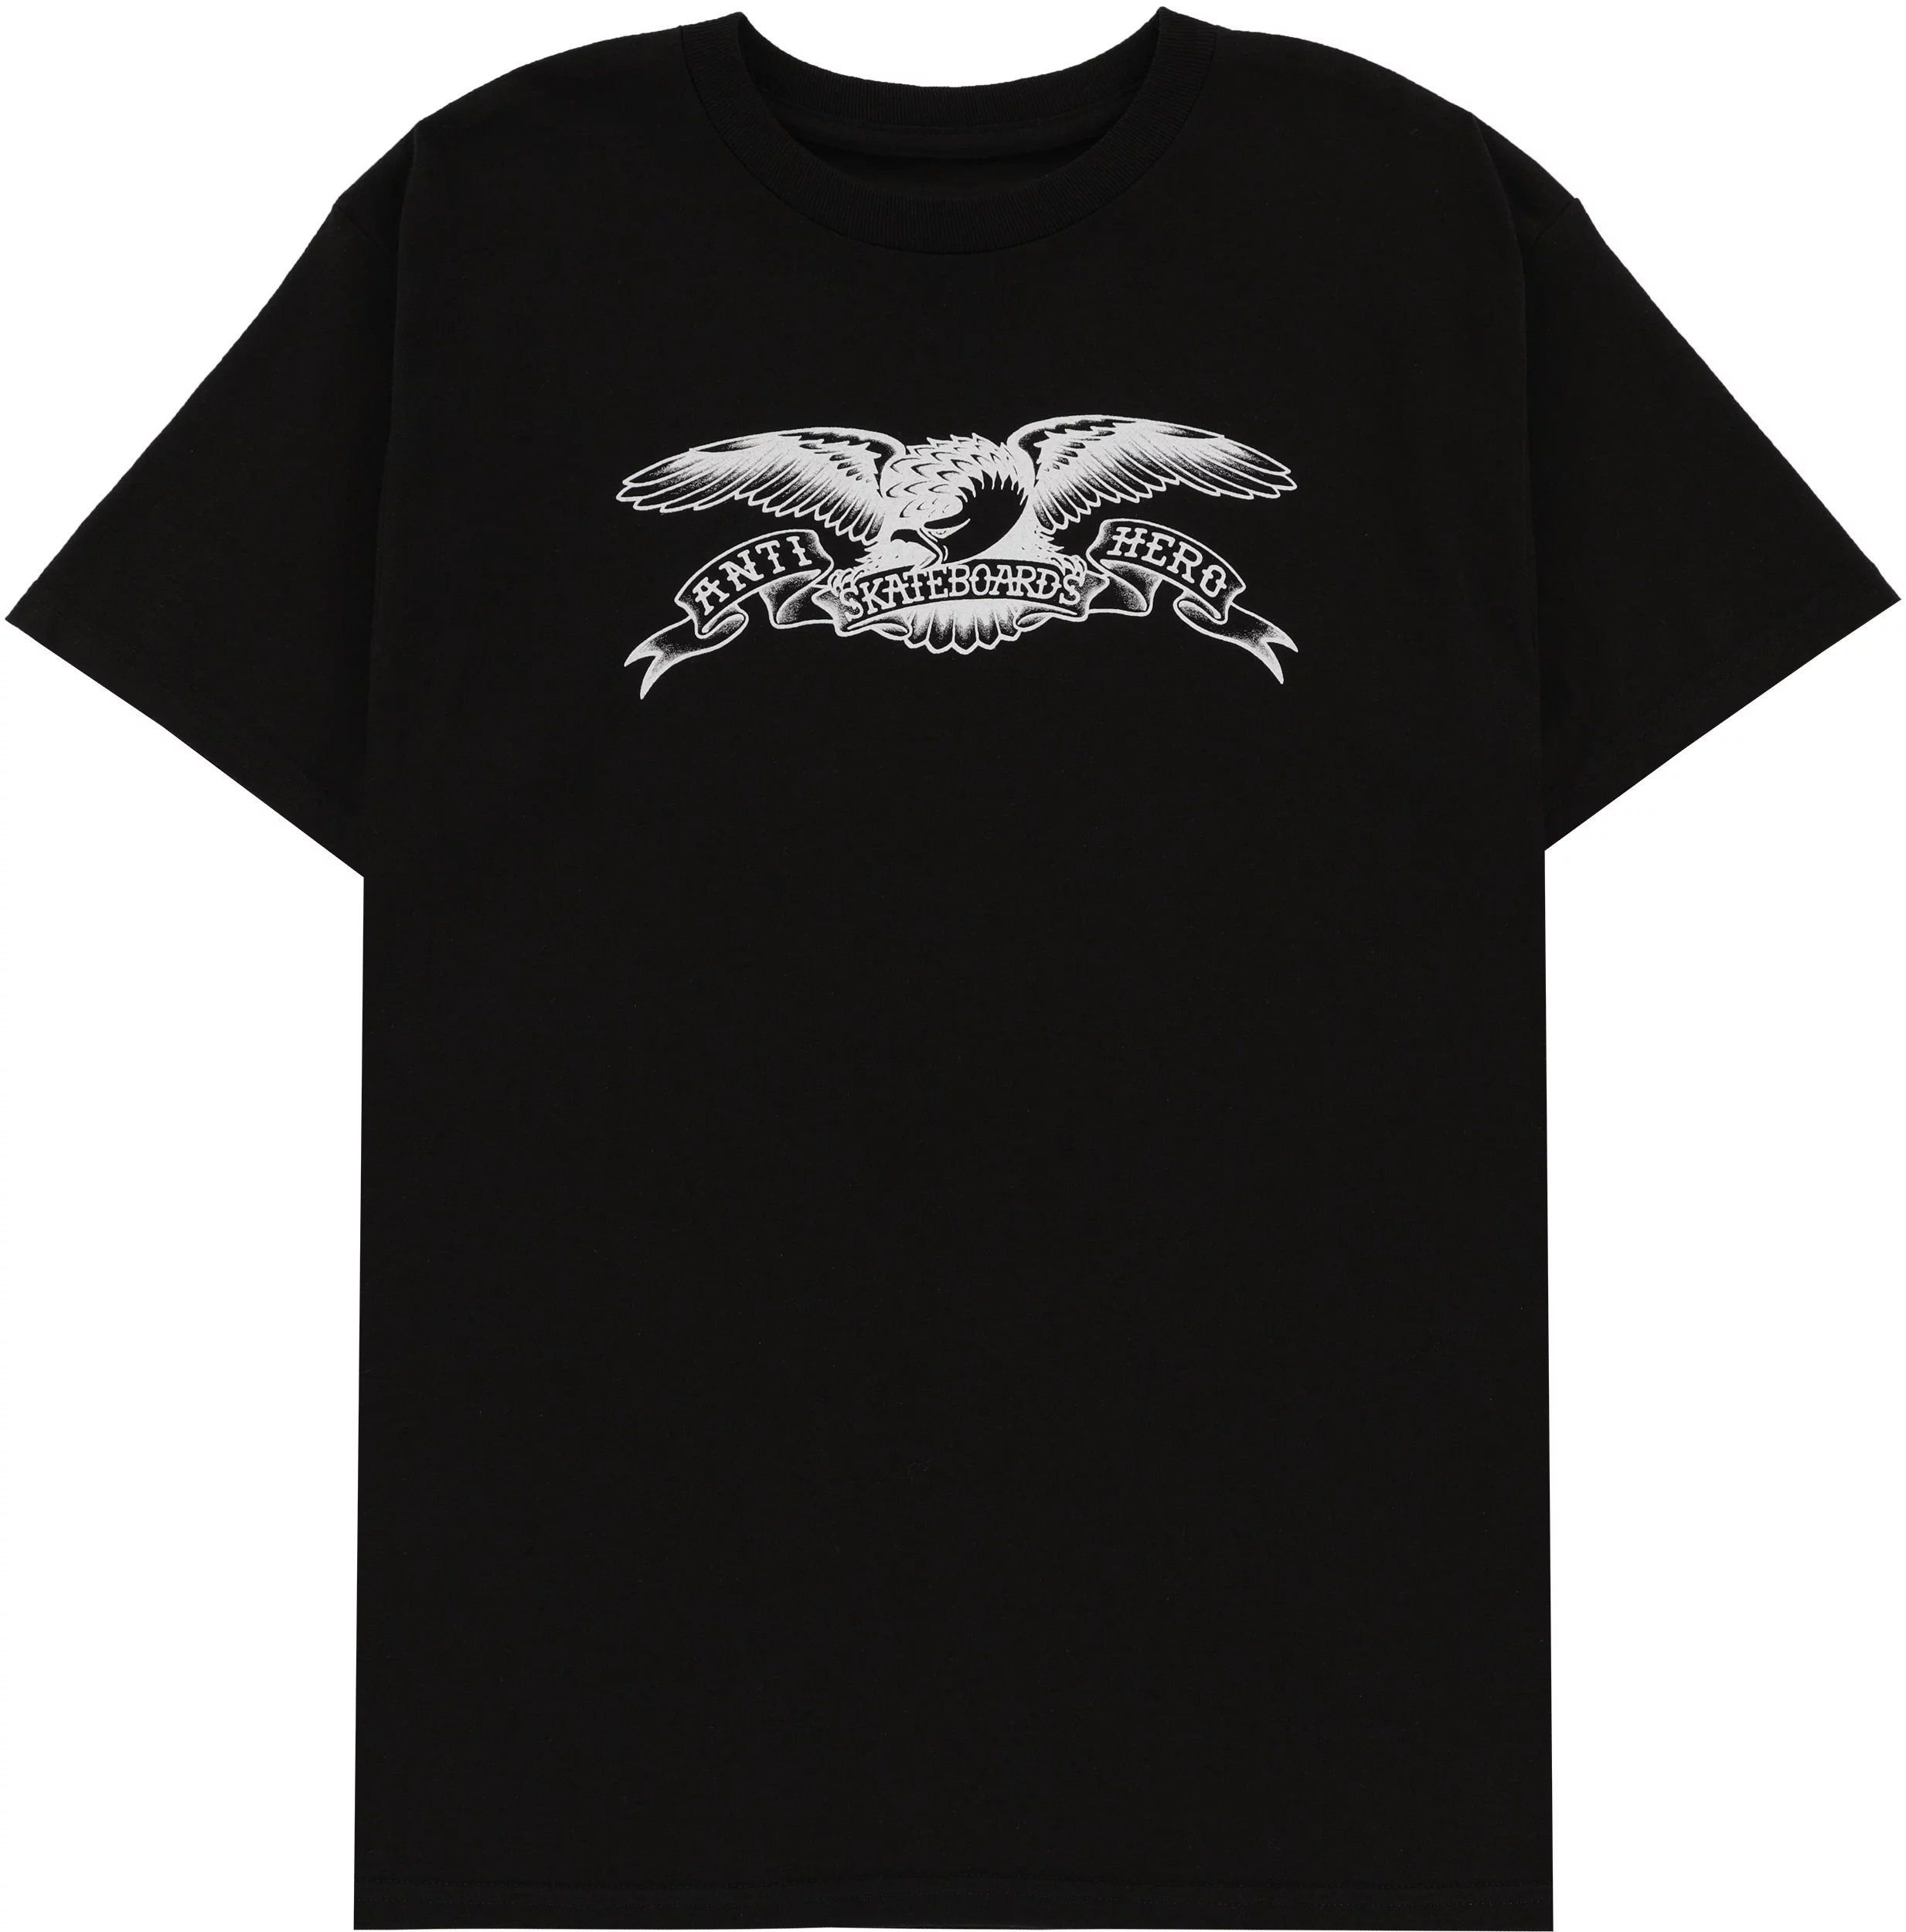 Cool Supreme X Antihero T Shirt Design By